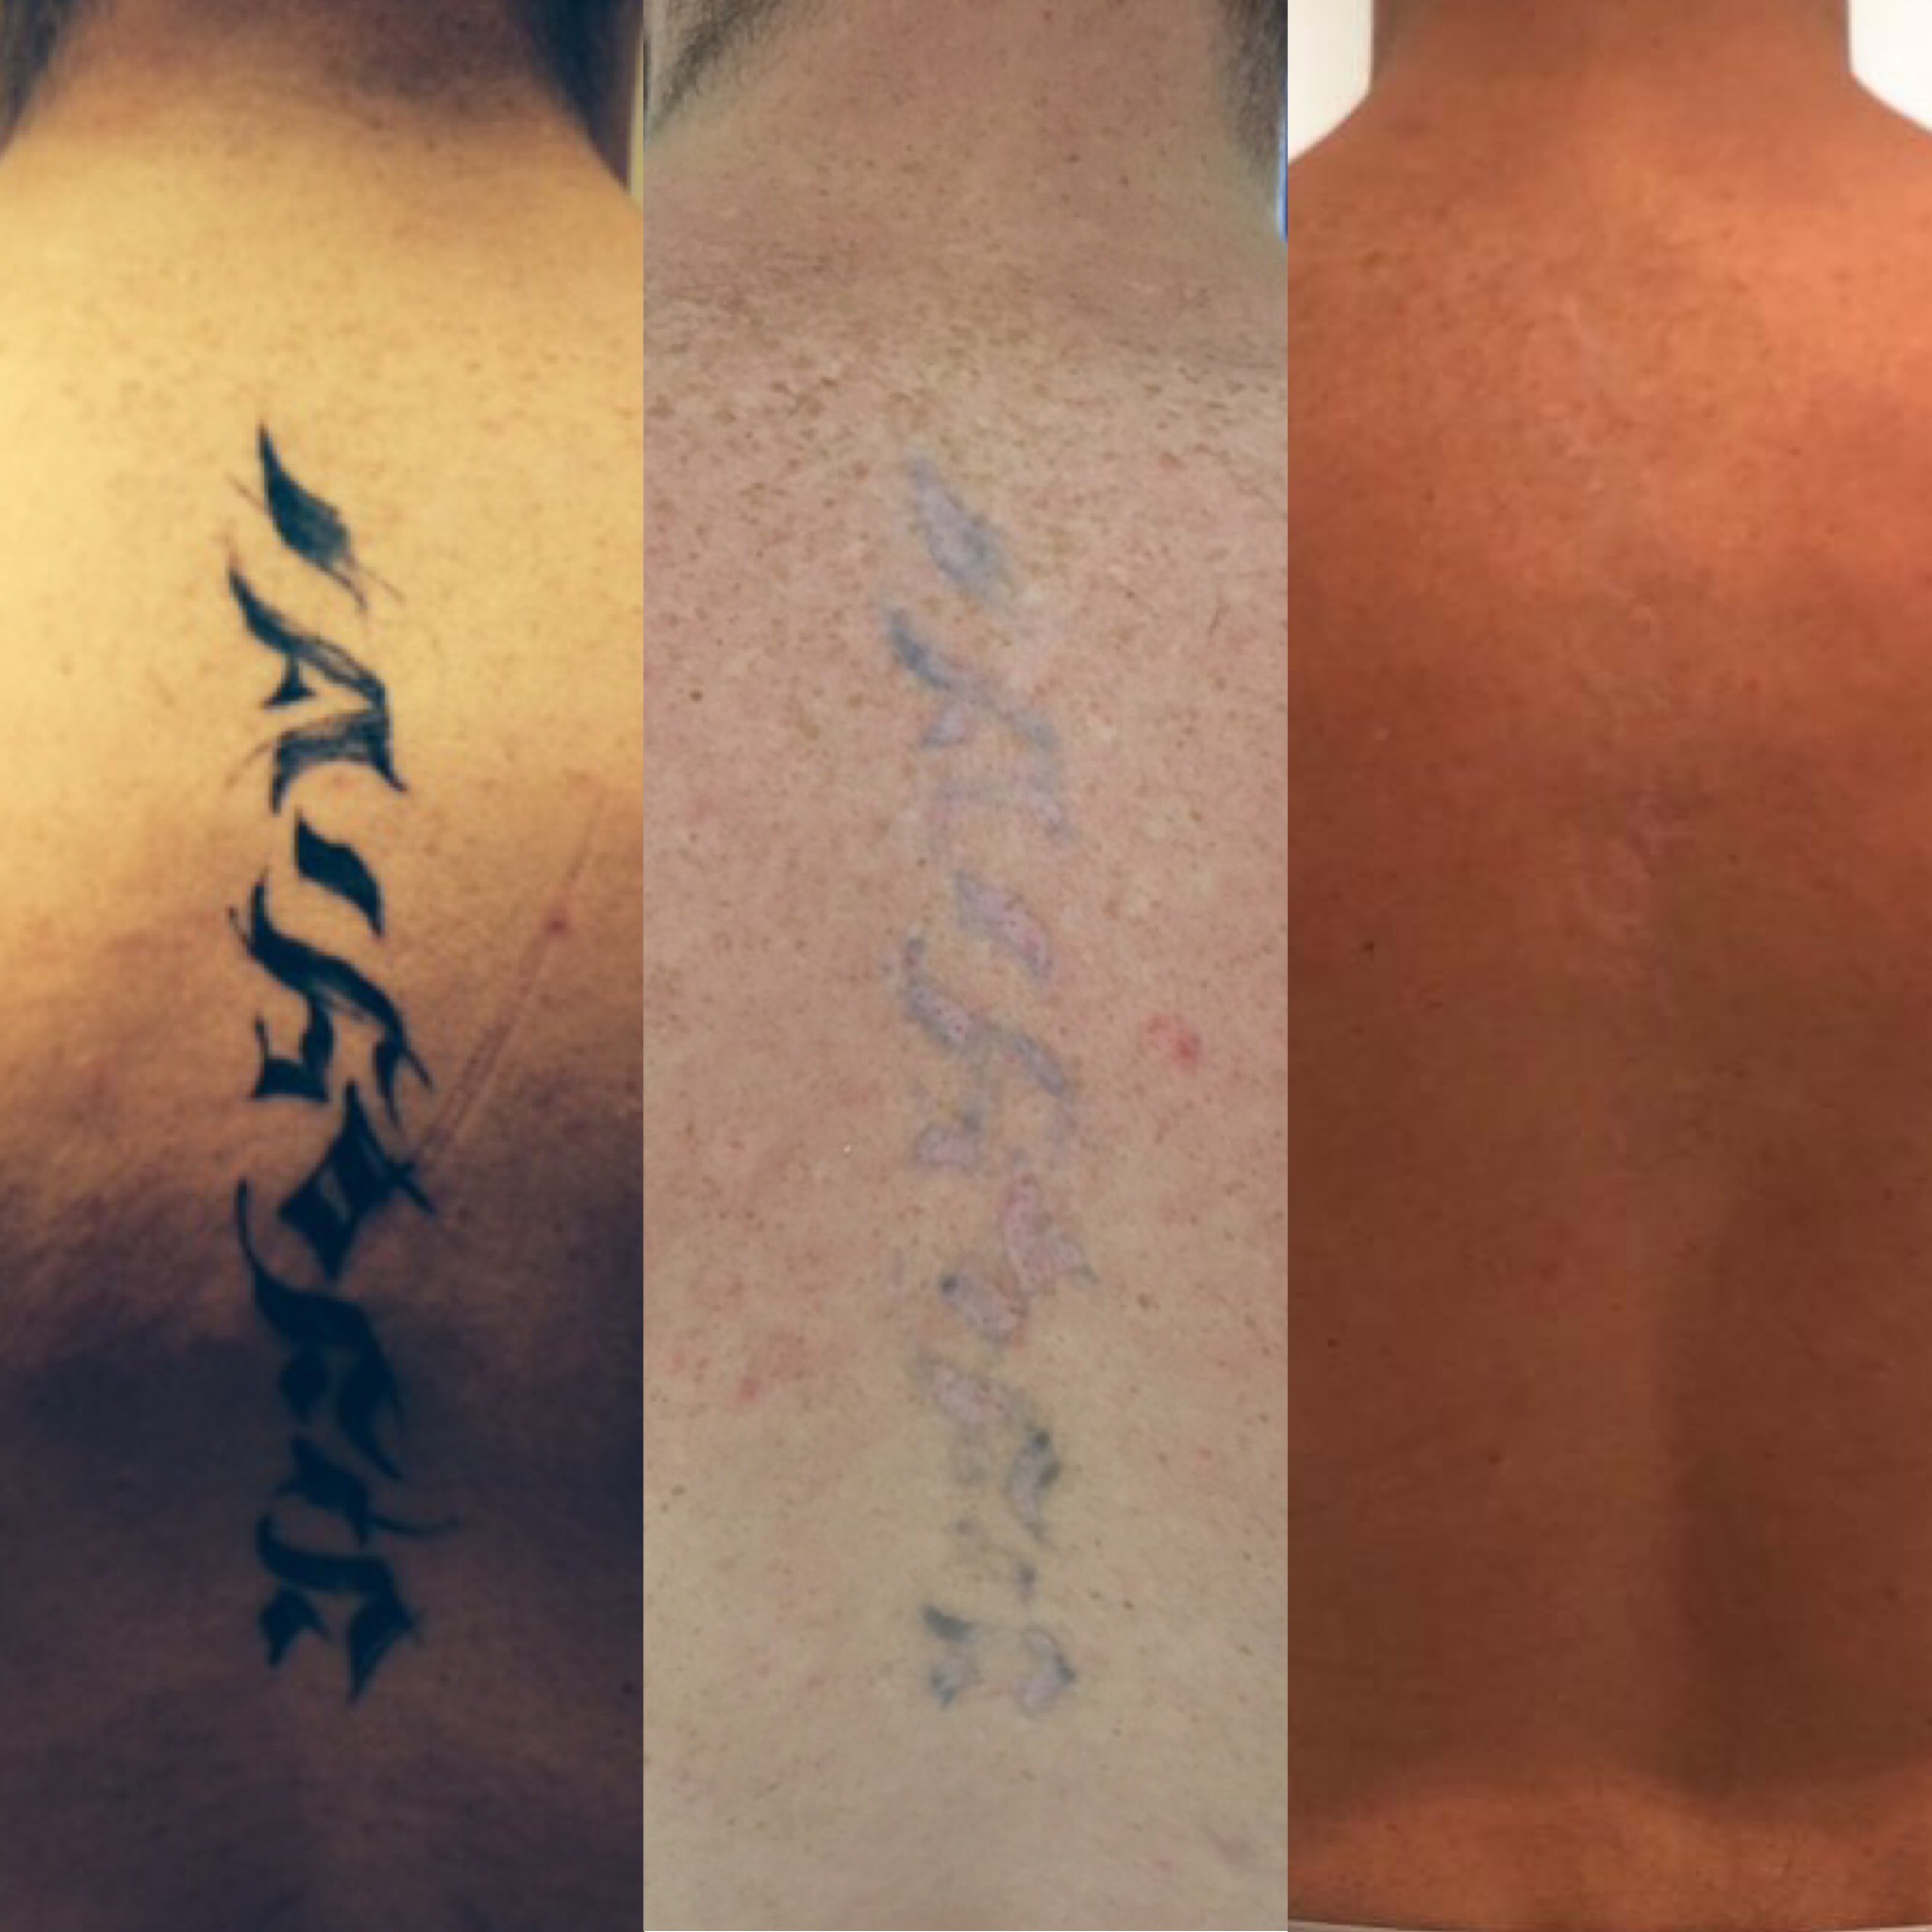 Laser Tattoo Removal Virginia Beach  David H McDaniel MD Laser Center  and Medical Spa